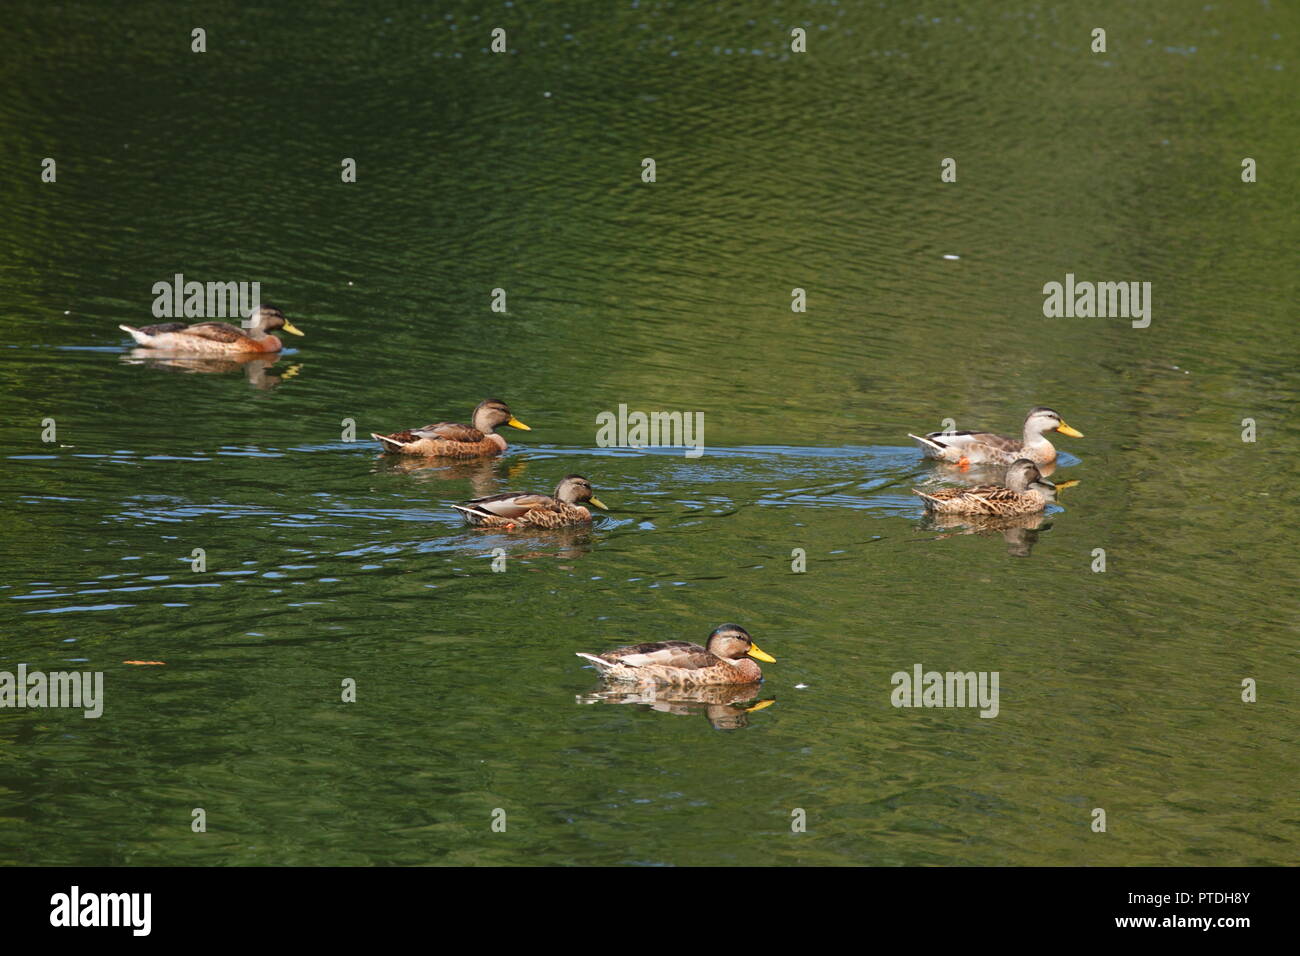 Ducks floating in a park pond, Anas platyrhynchos Stock Photo